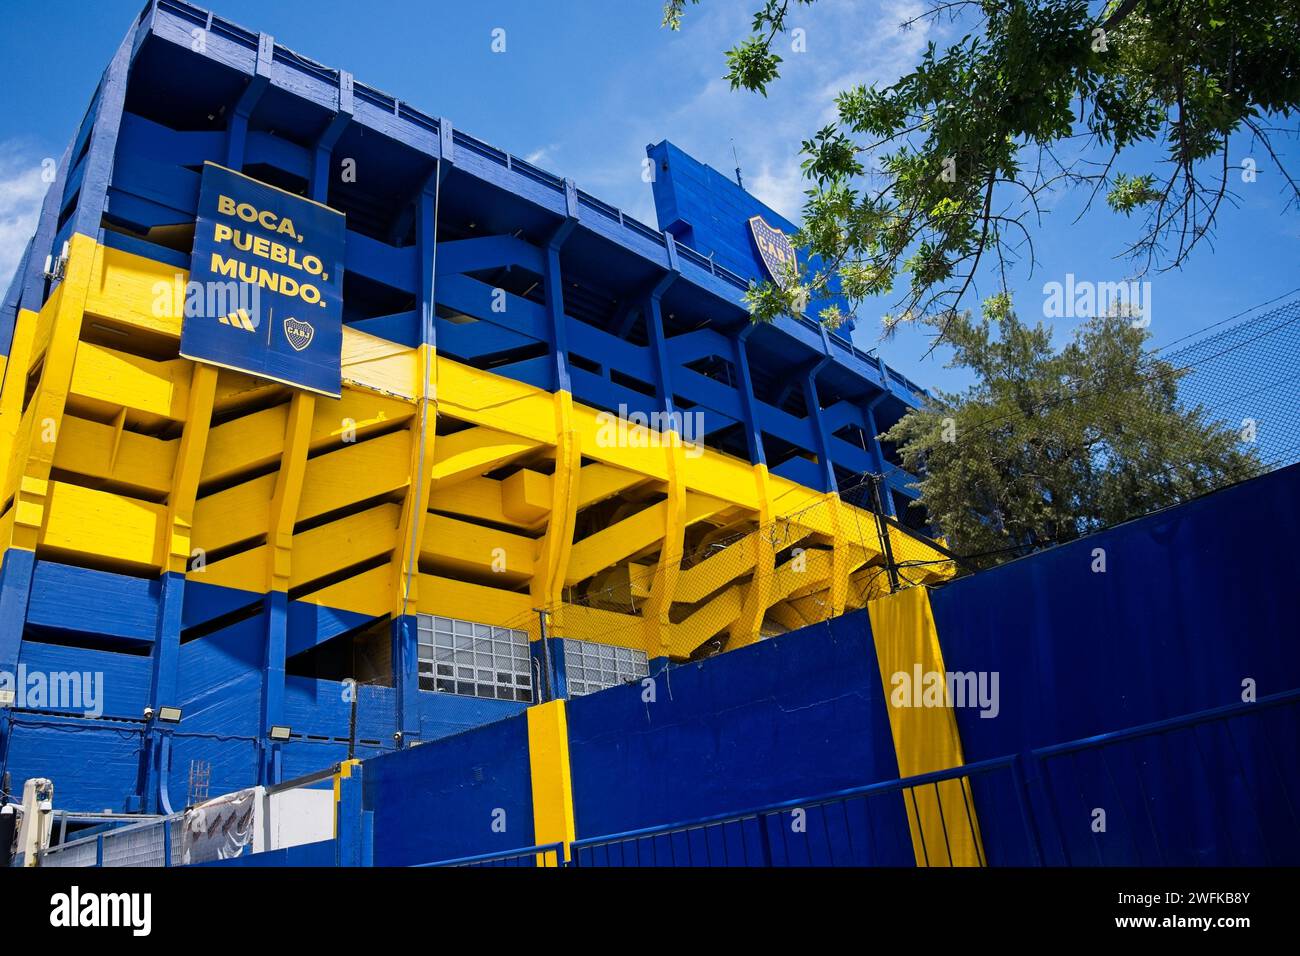 The legendary stadium La Bombonera, home of Maradona's beloved Boca Juniors. Stock Photo